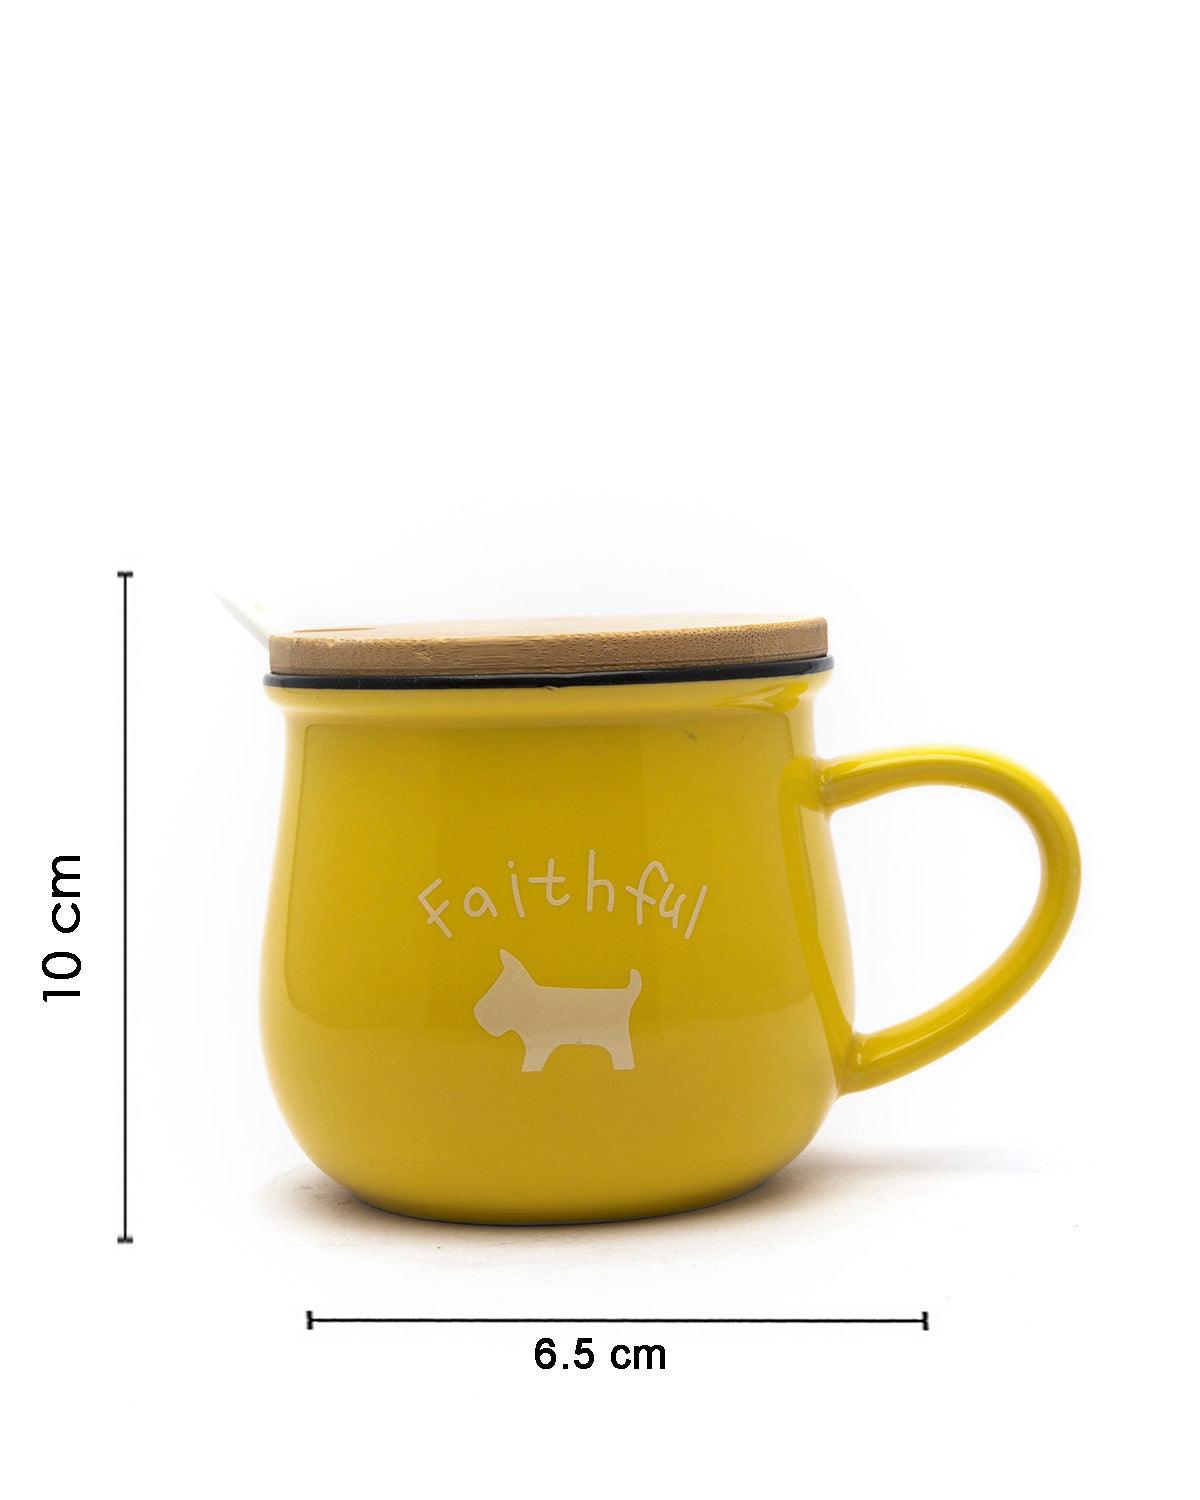 Mug with Lid & Spoon, Tea & Coffee Mug, Yellow, Ceramic, 400 mL - MARKET 99